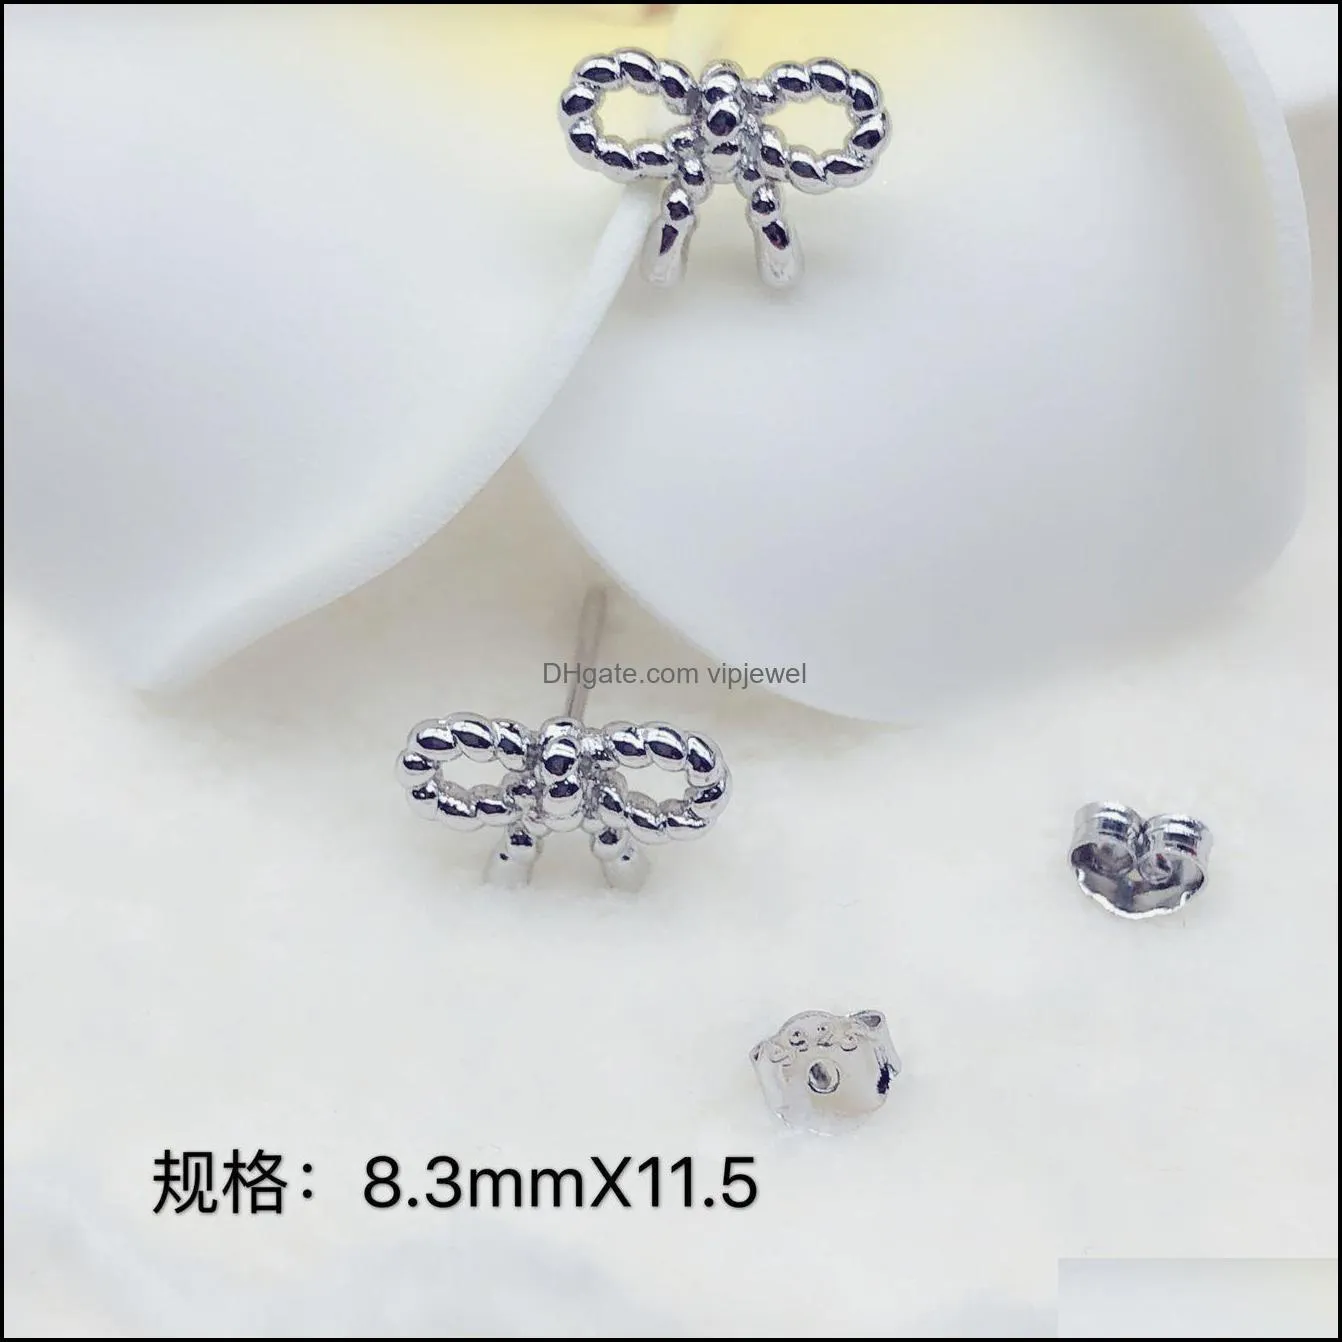 cz stud earrings wedding jewelry sparkling bow charms earrings copper plated silver jewelry beautiful bow earrings